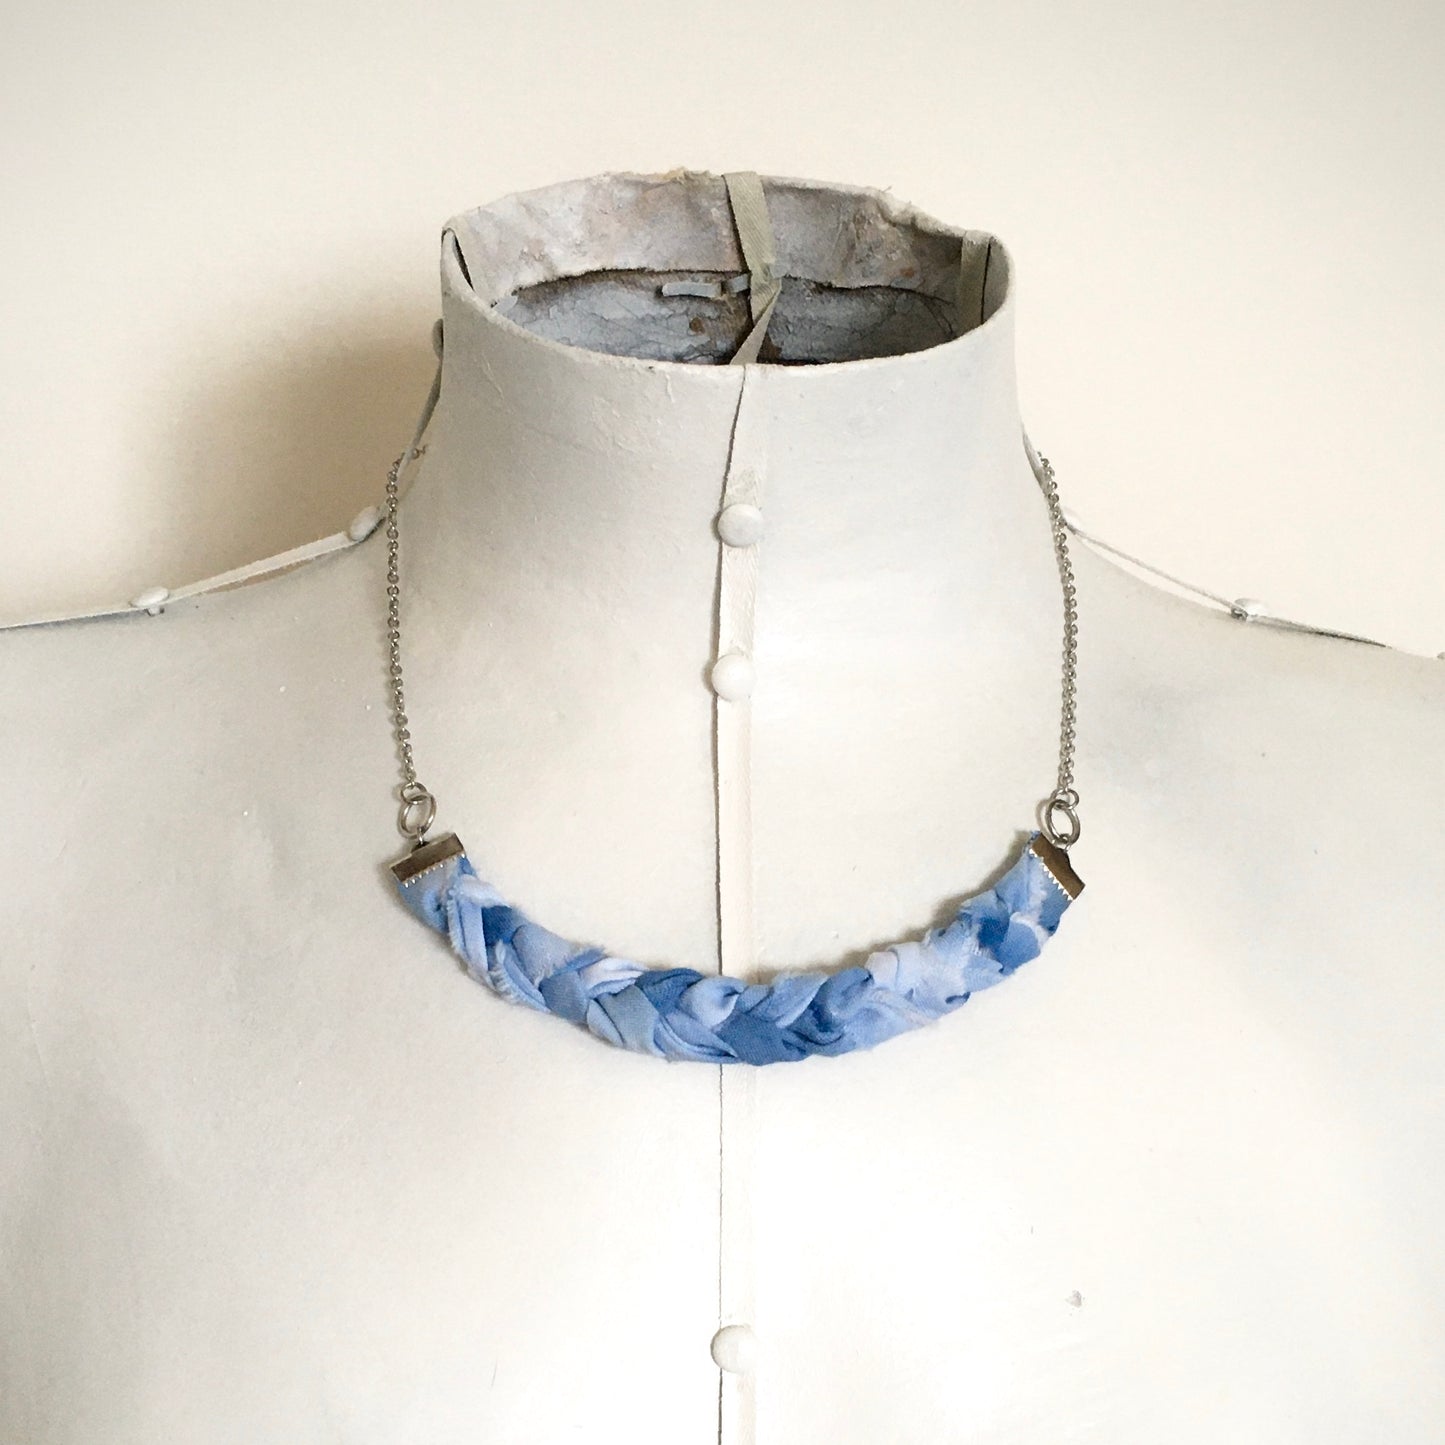 Shibori Hand-Dyed Necklaces